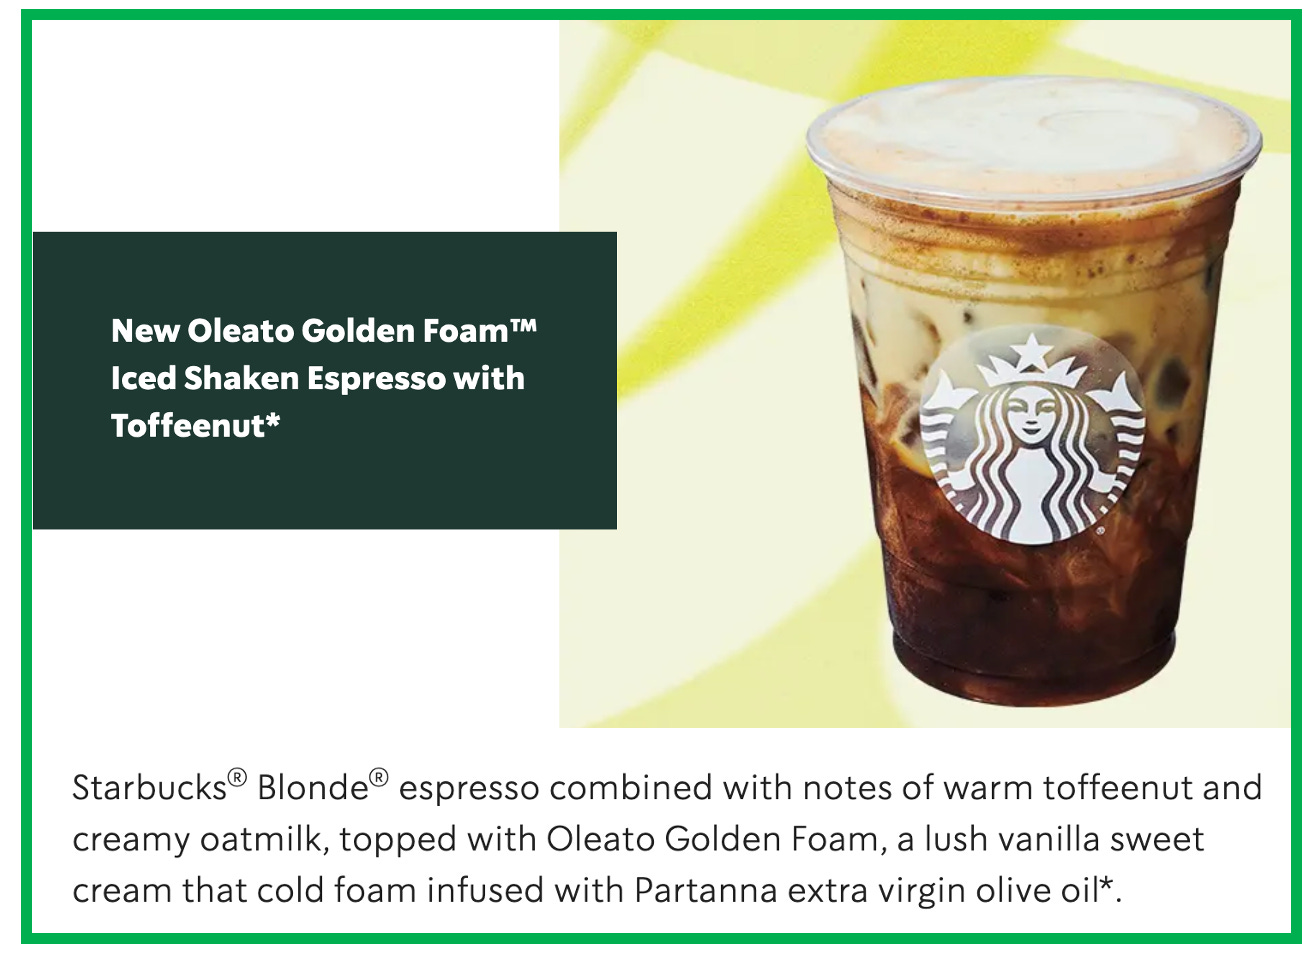 Starbucks marketing material for Oleato